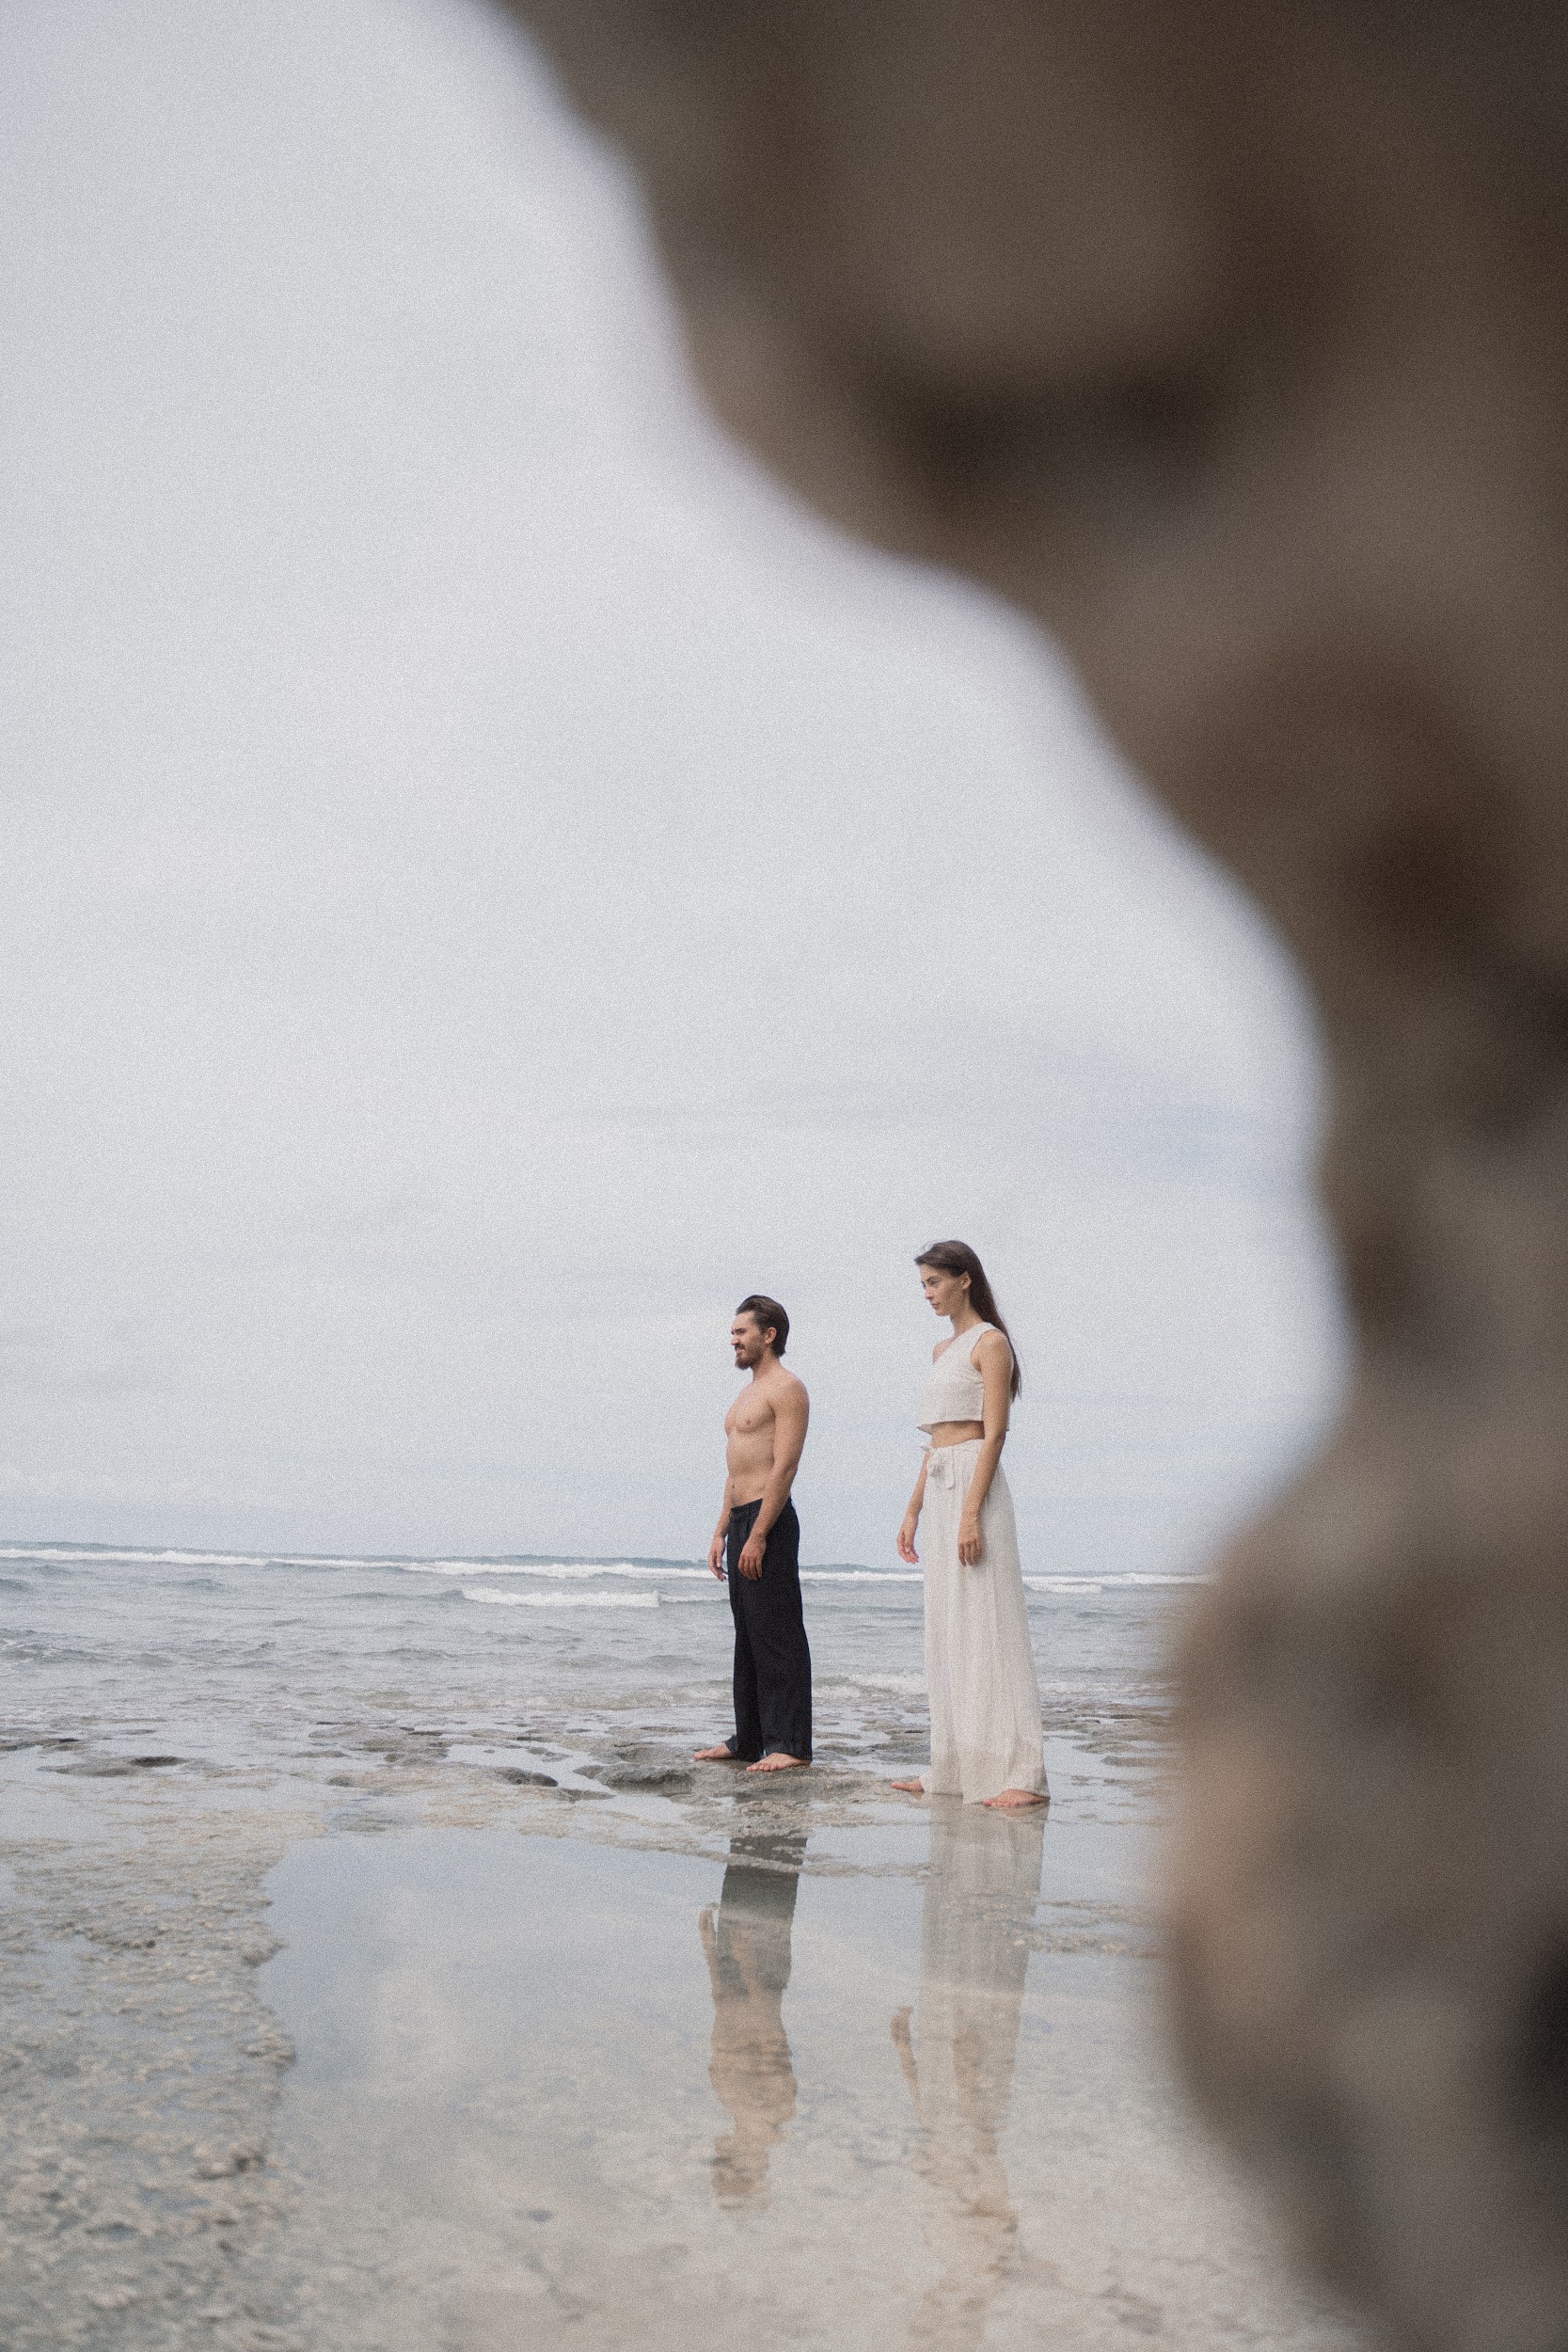 Mariage intime à Bali © Alexa Curly